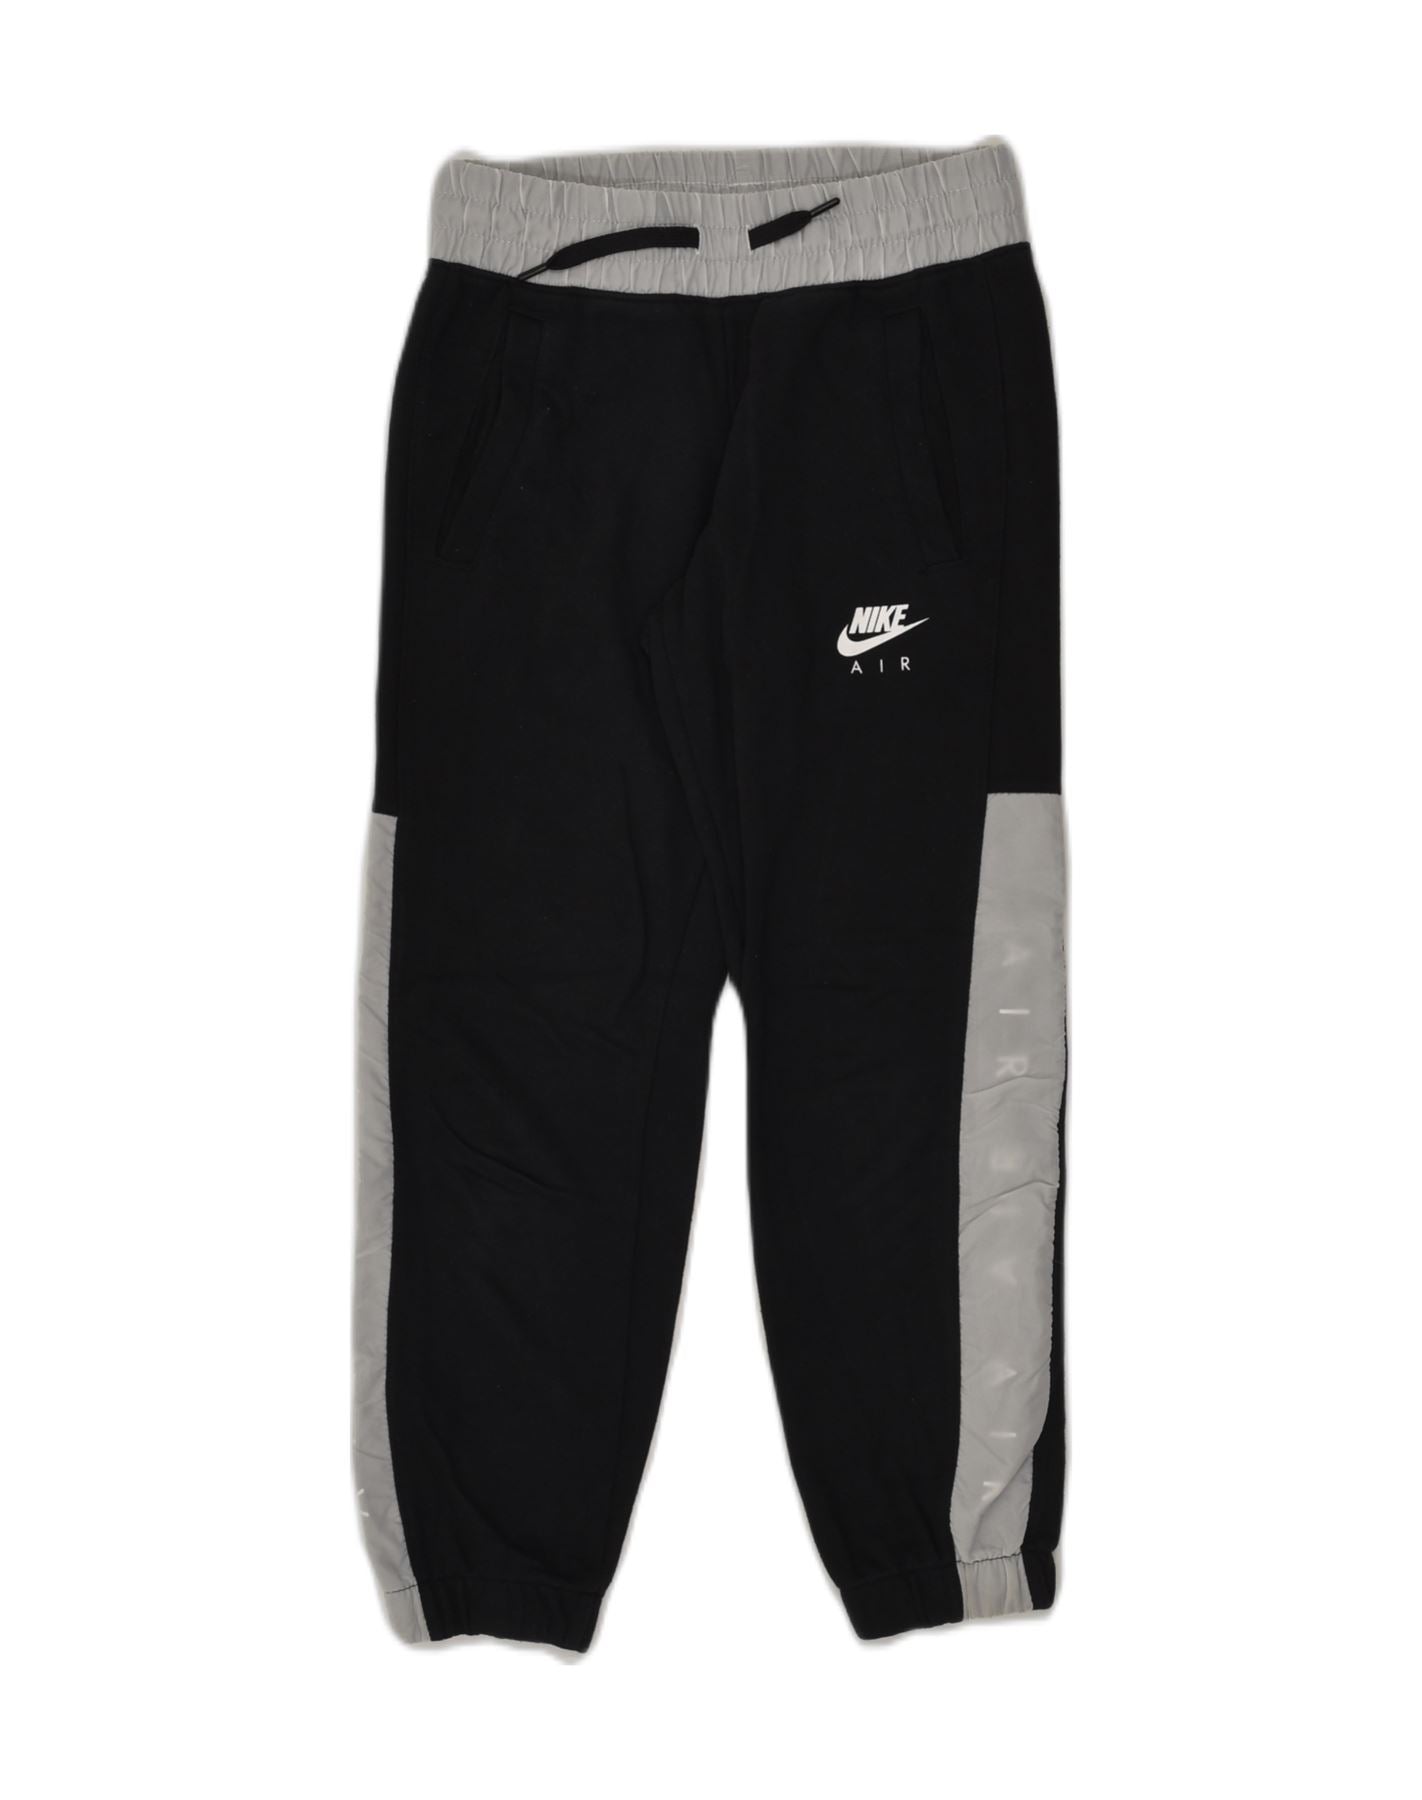 Nike Track Pants 1419 - Ragstock.com